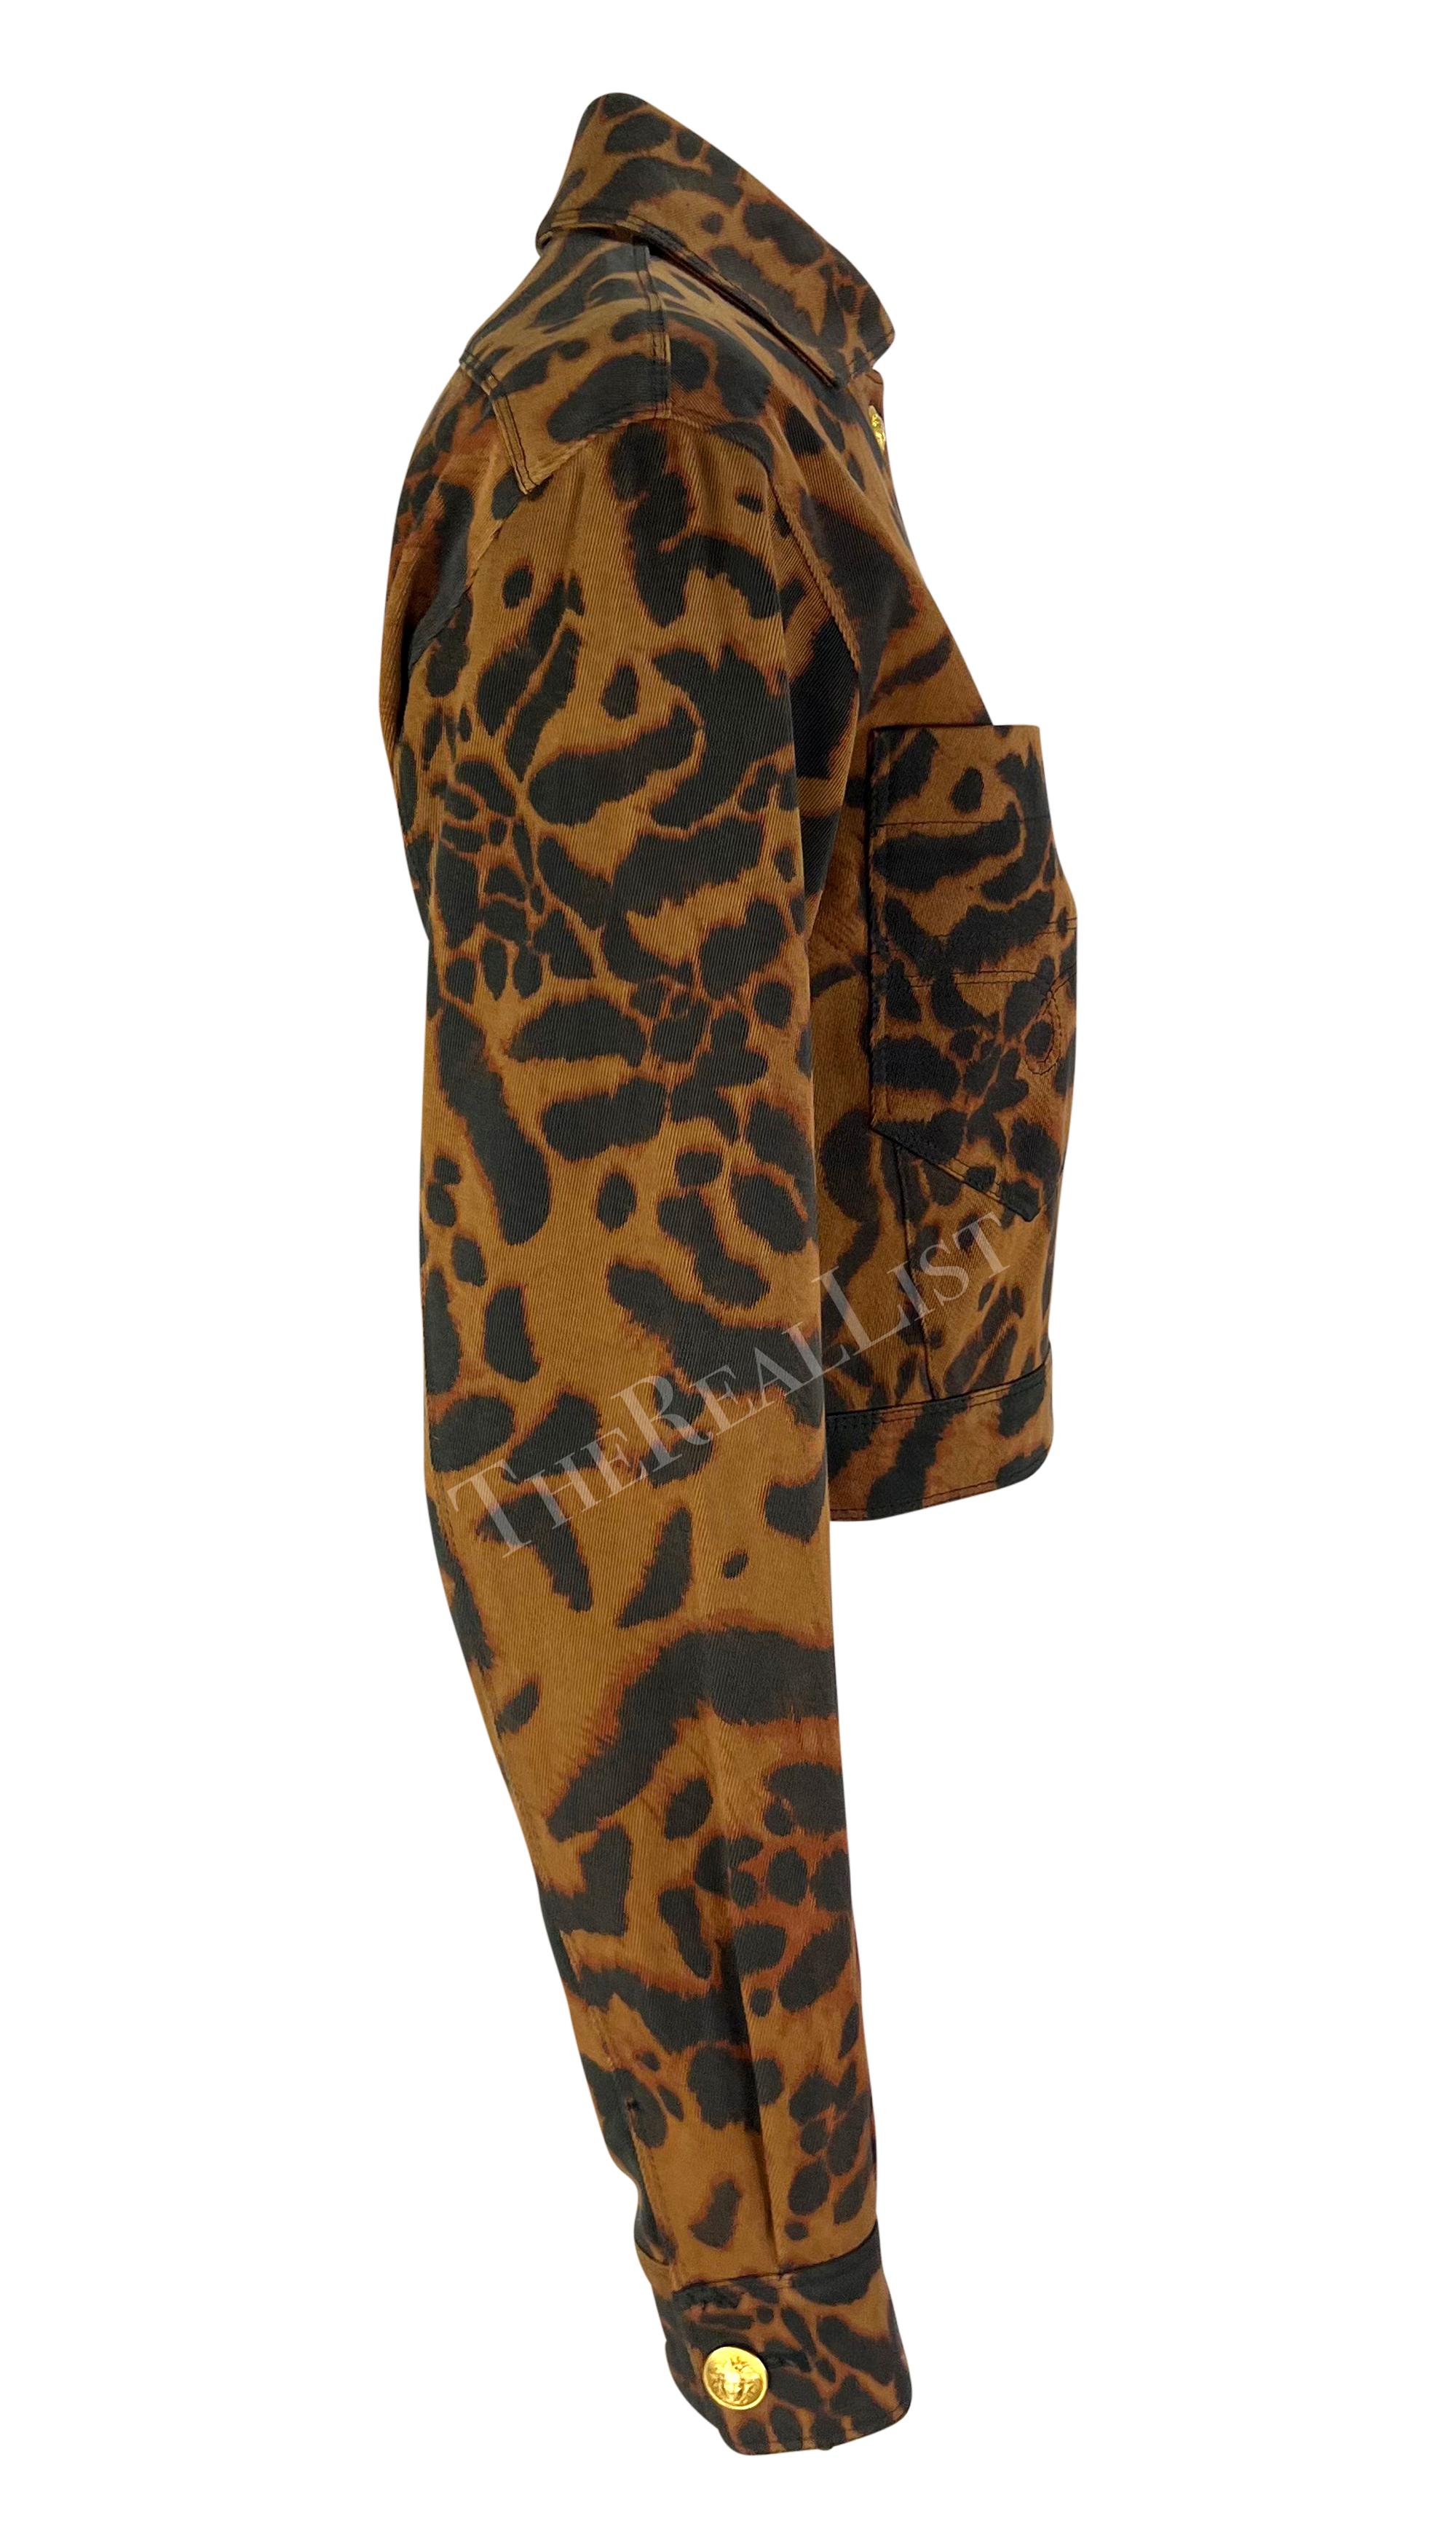 S/S 1992 Gianni Versace Runway Brown Cheetah Print Denim Medusa Cropped Jacket For Sale 6